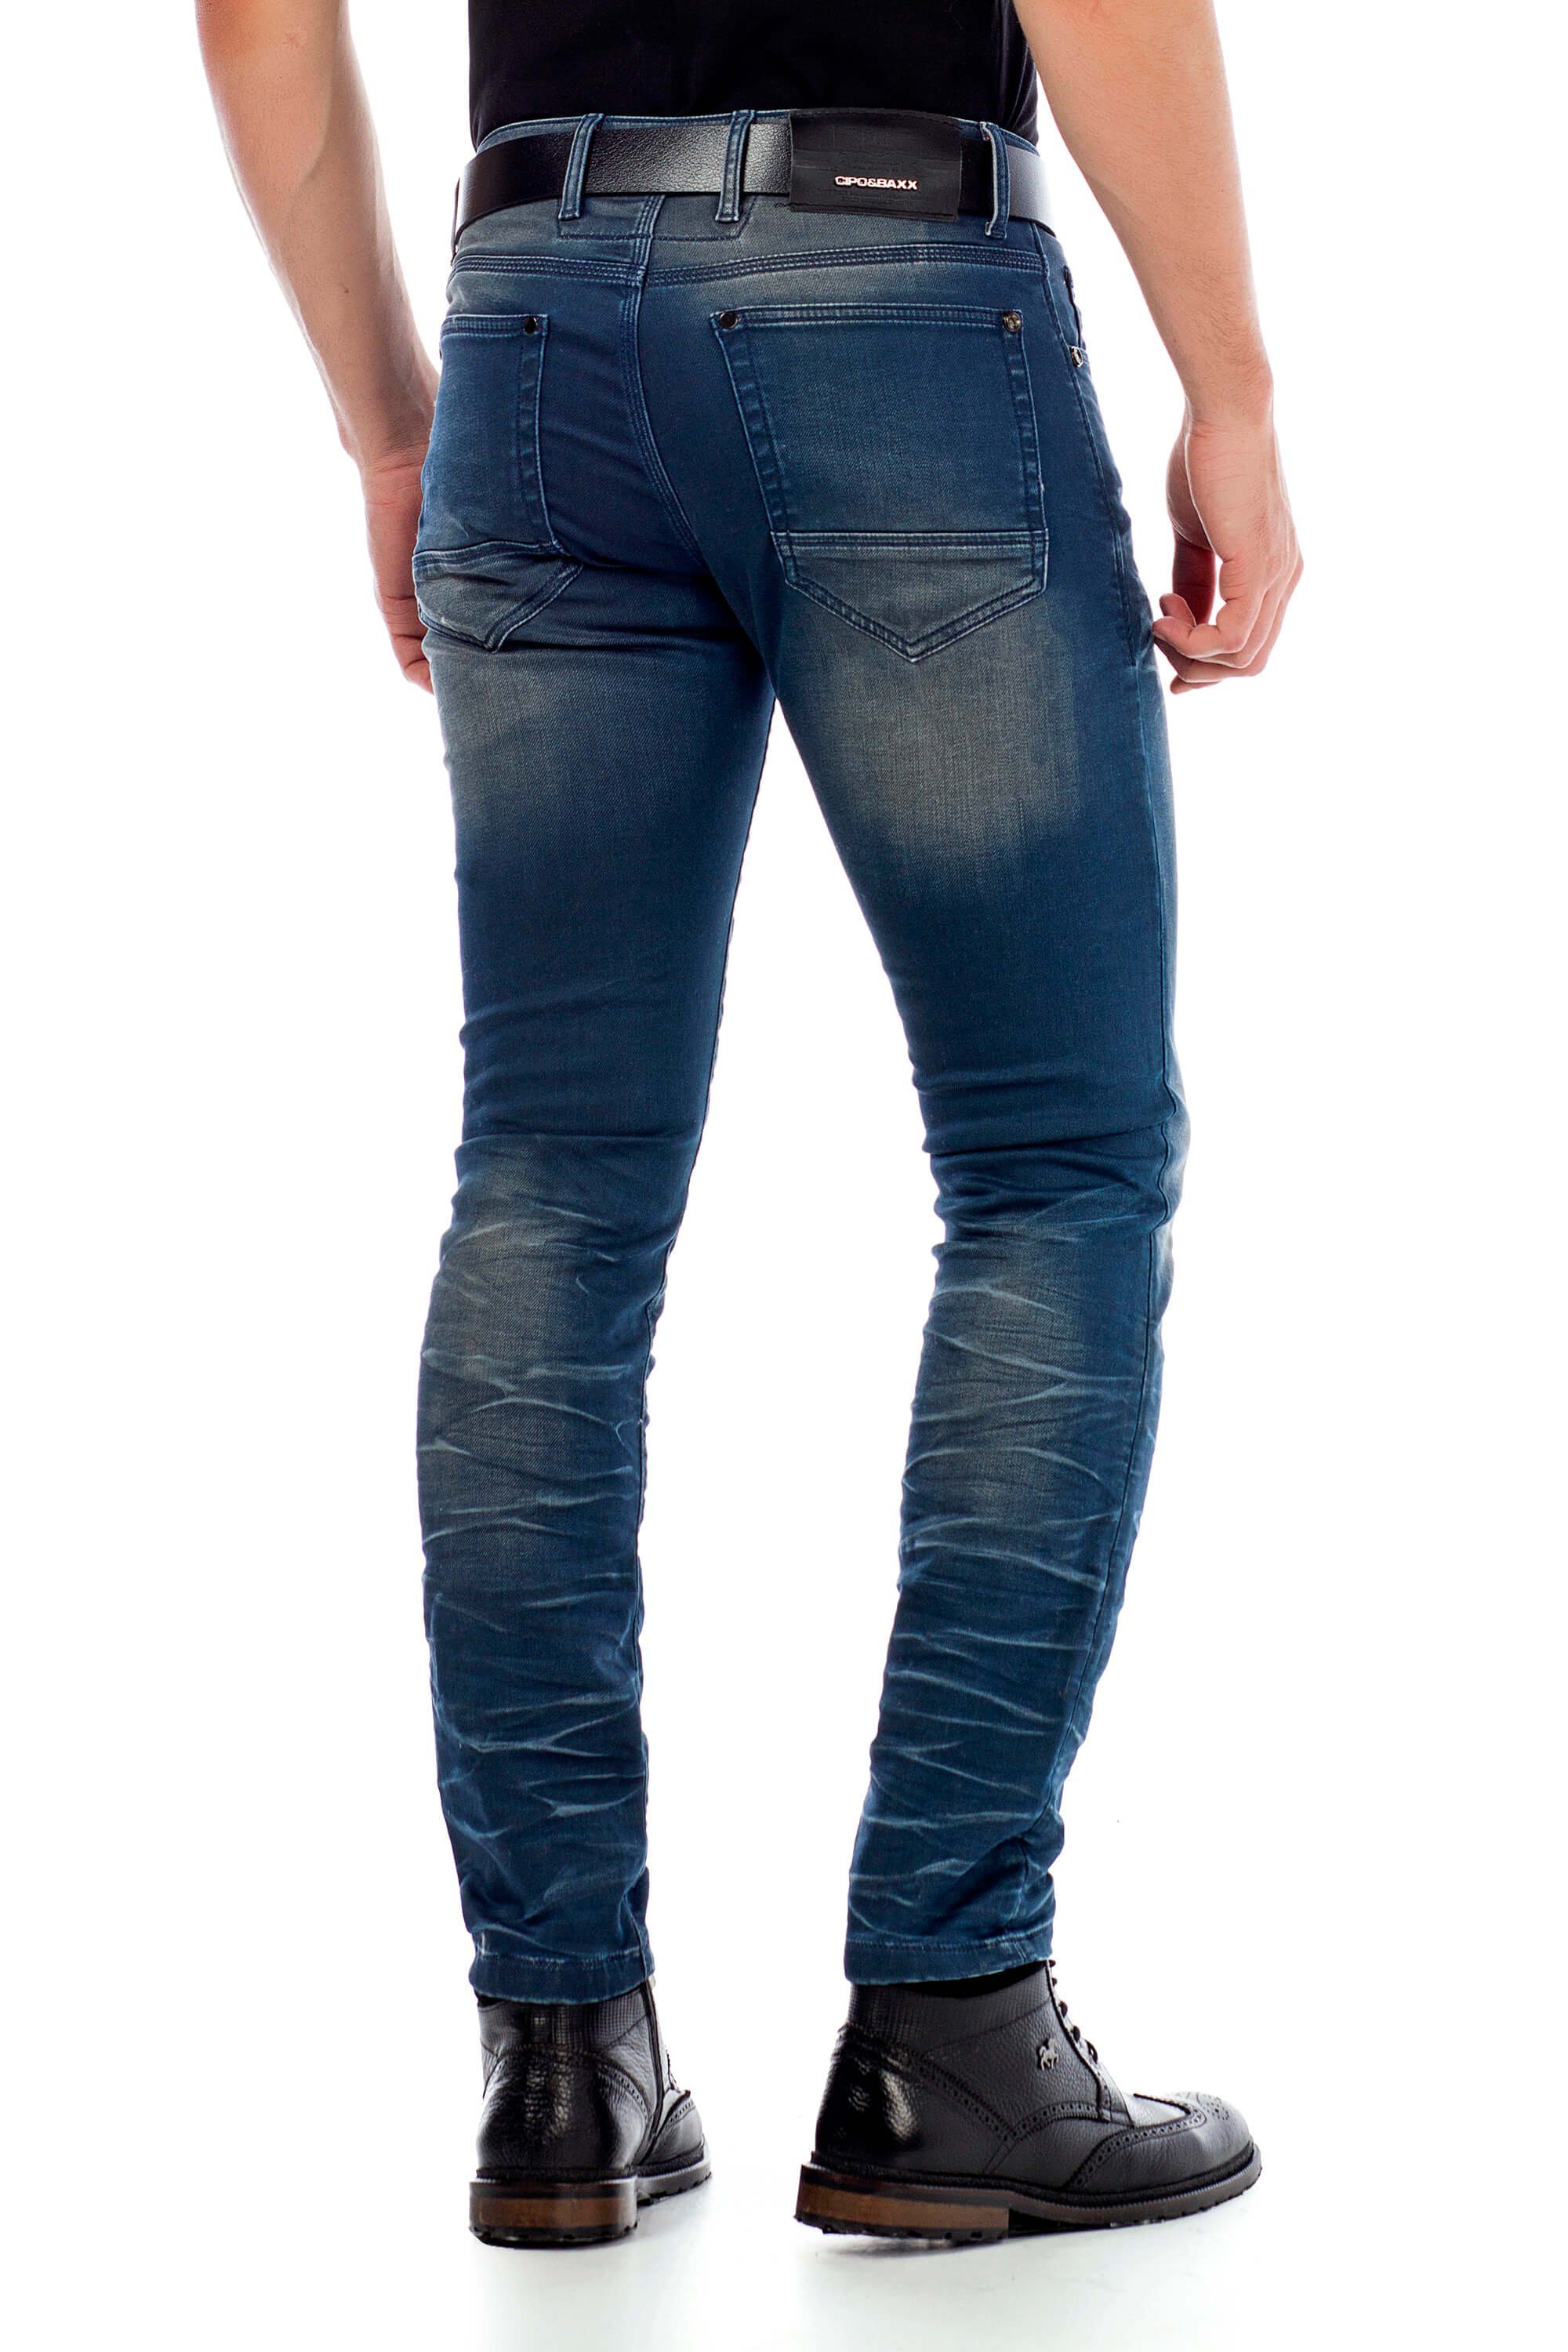 Fit Straight Slim-fit-Jeans in blau Style Baxx im 5-Pocket Cipo &